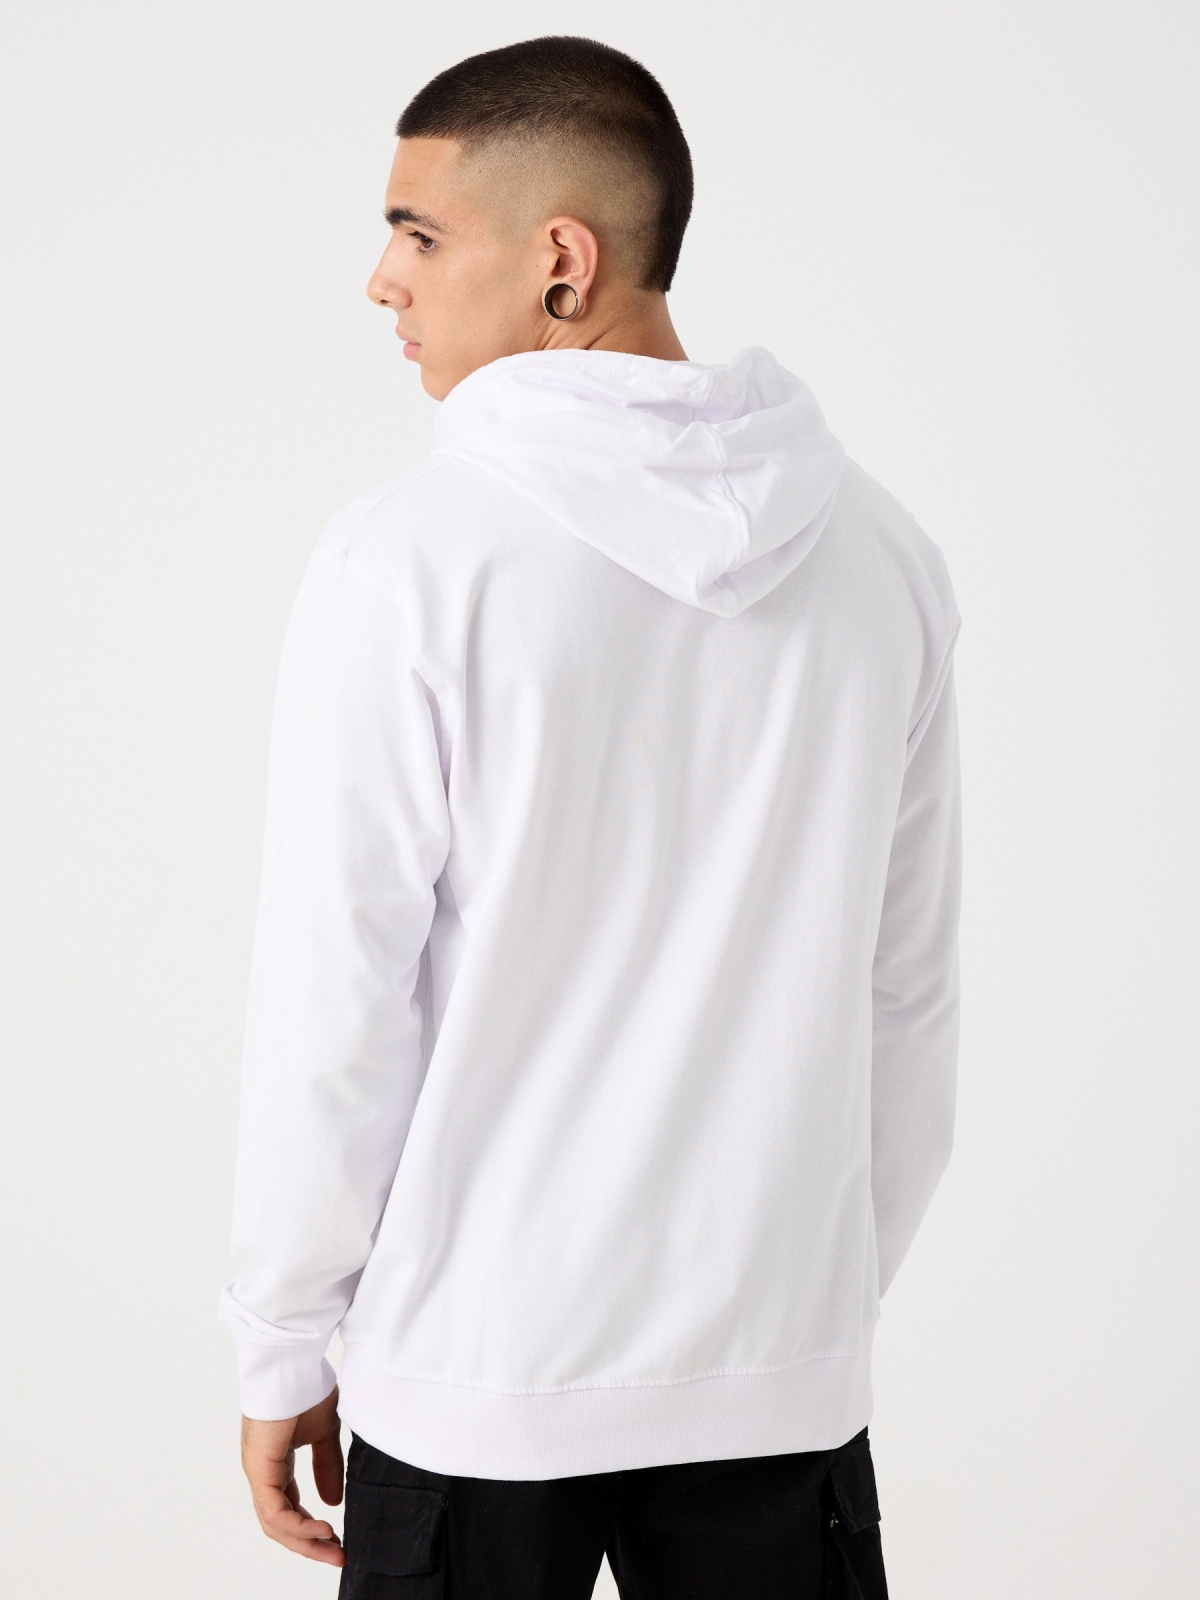 Kangaroo sweatshirt with logo white middle back view